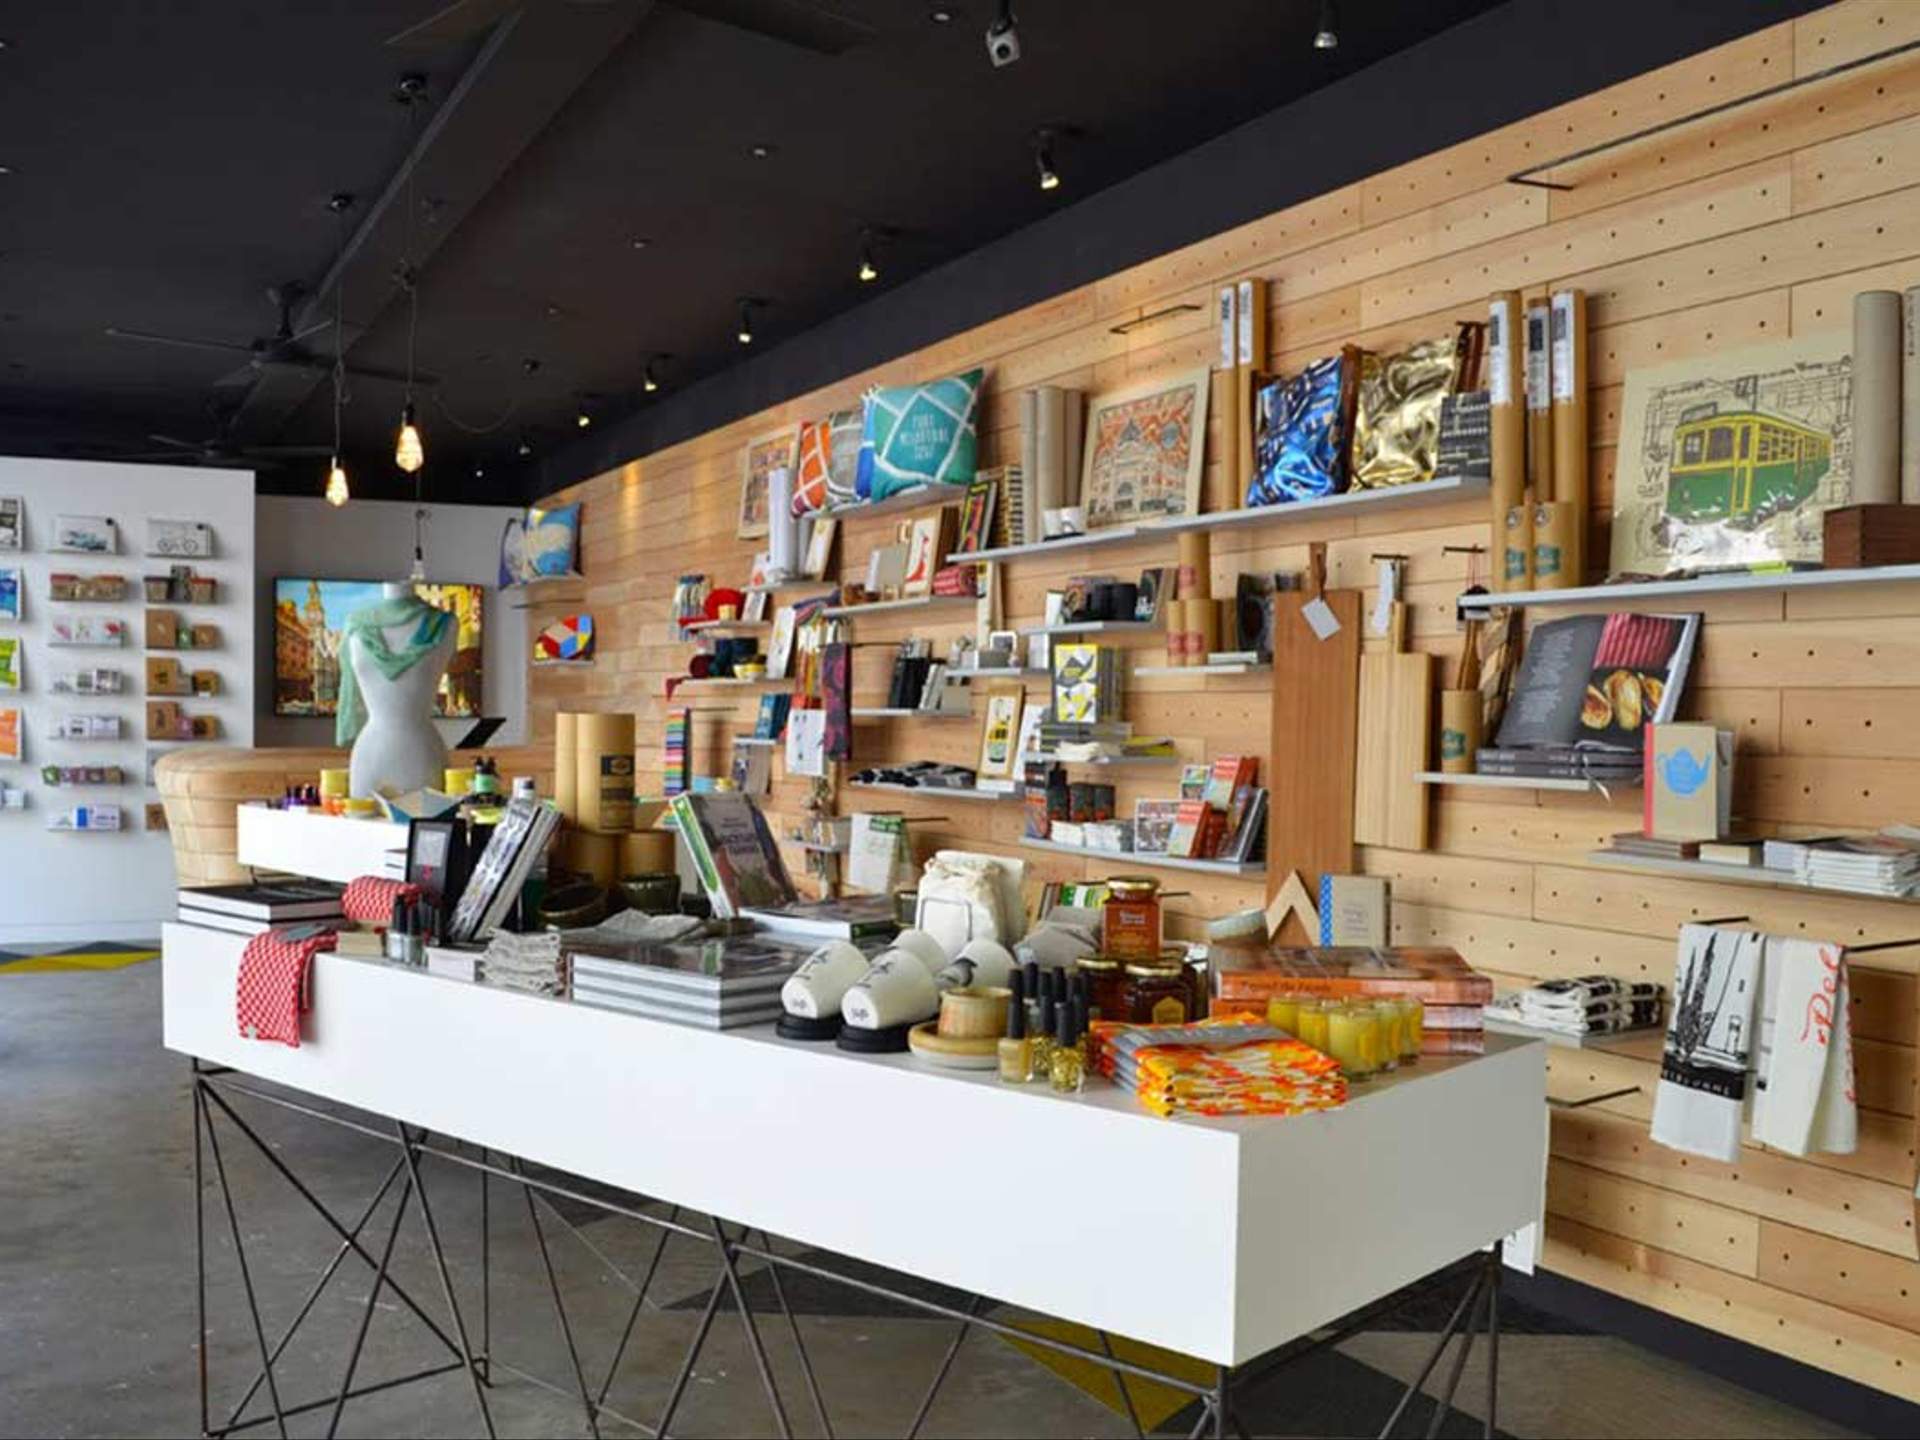 Tote Bag — Design Shop Interior Design